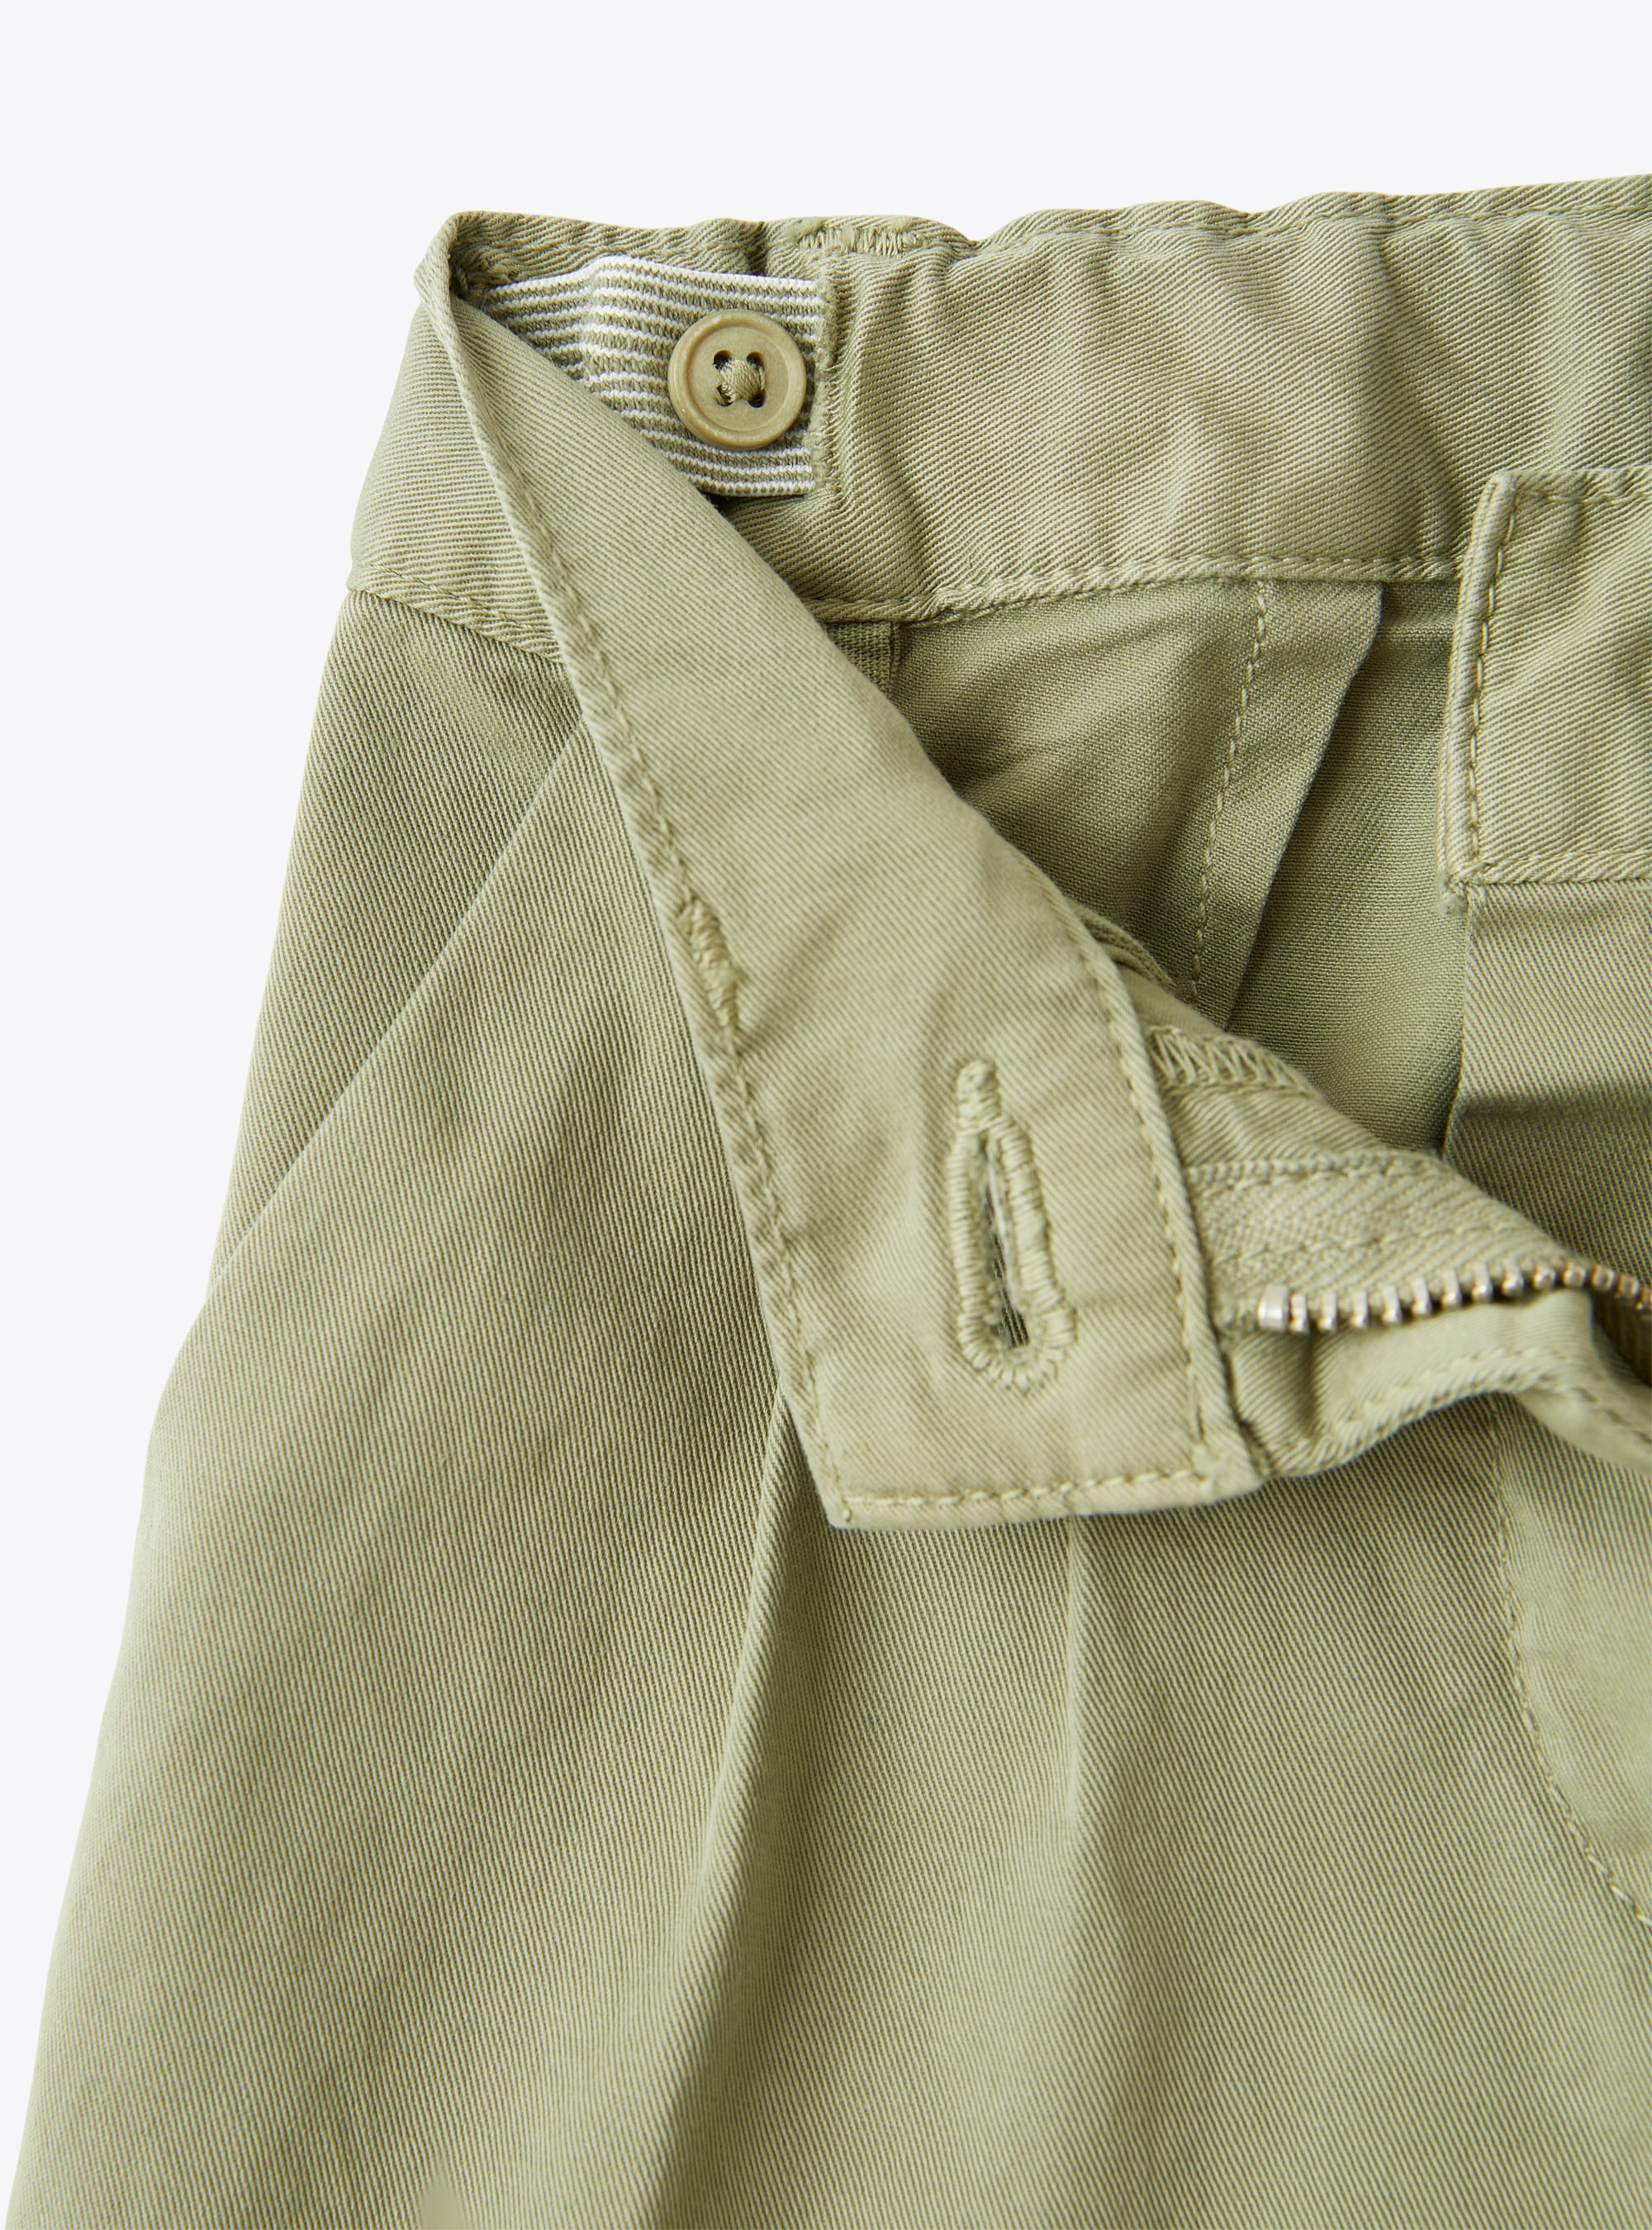 Shorts in sage-green stretch gabardine - Green | Il Gufo